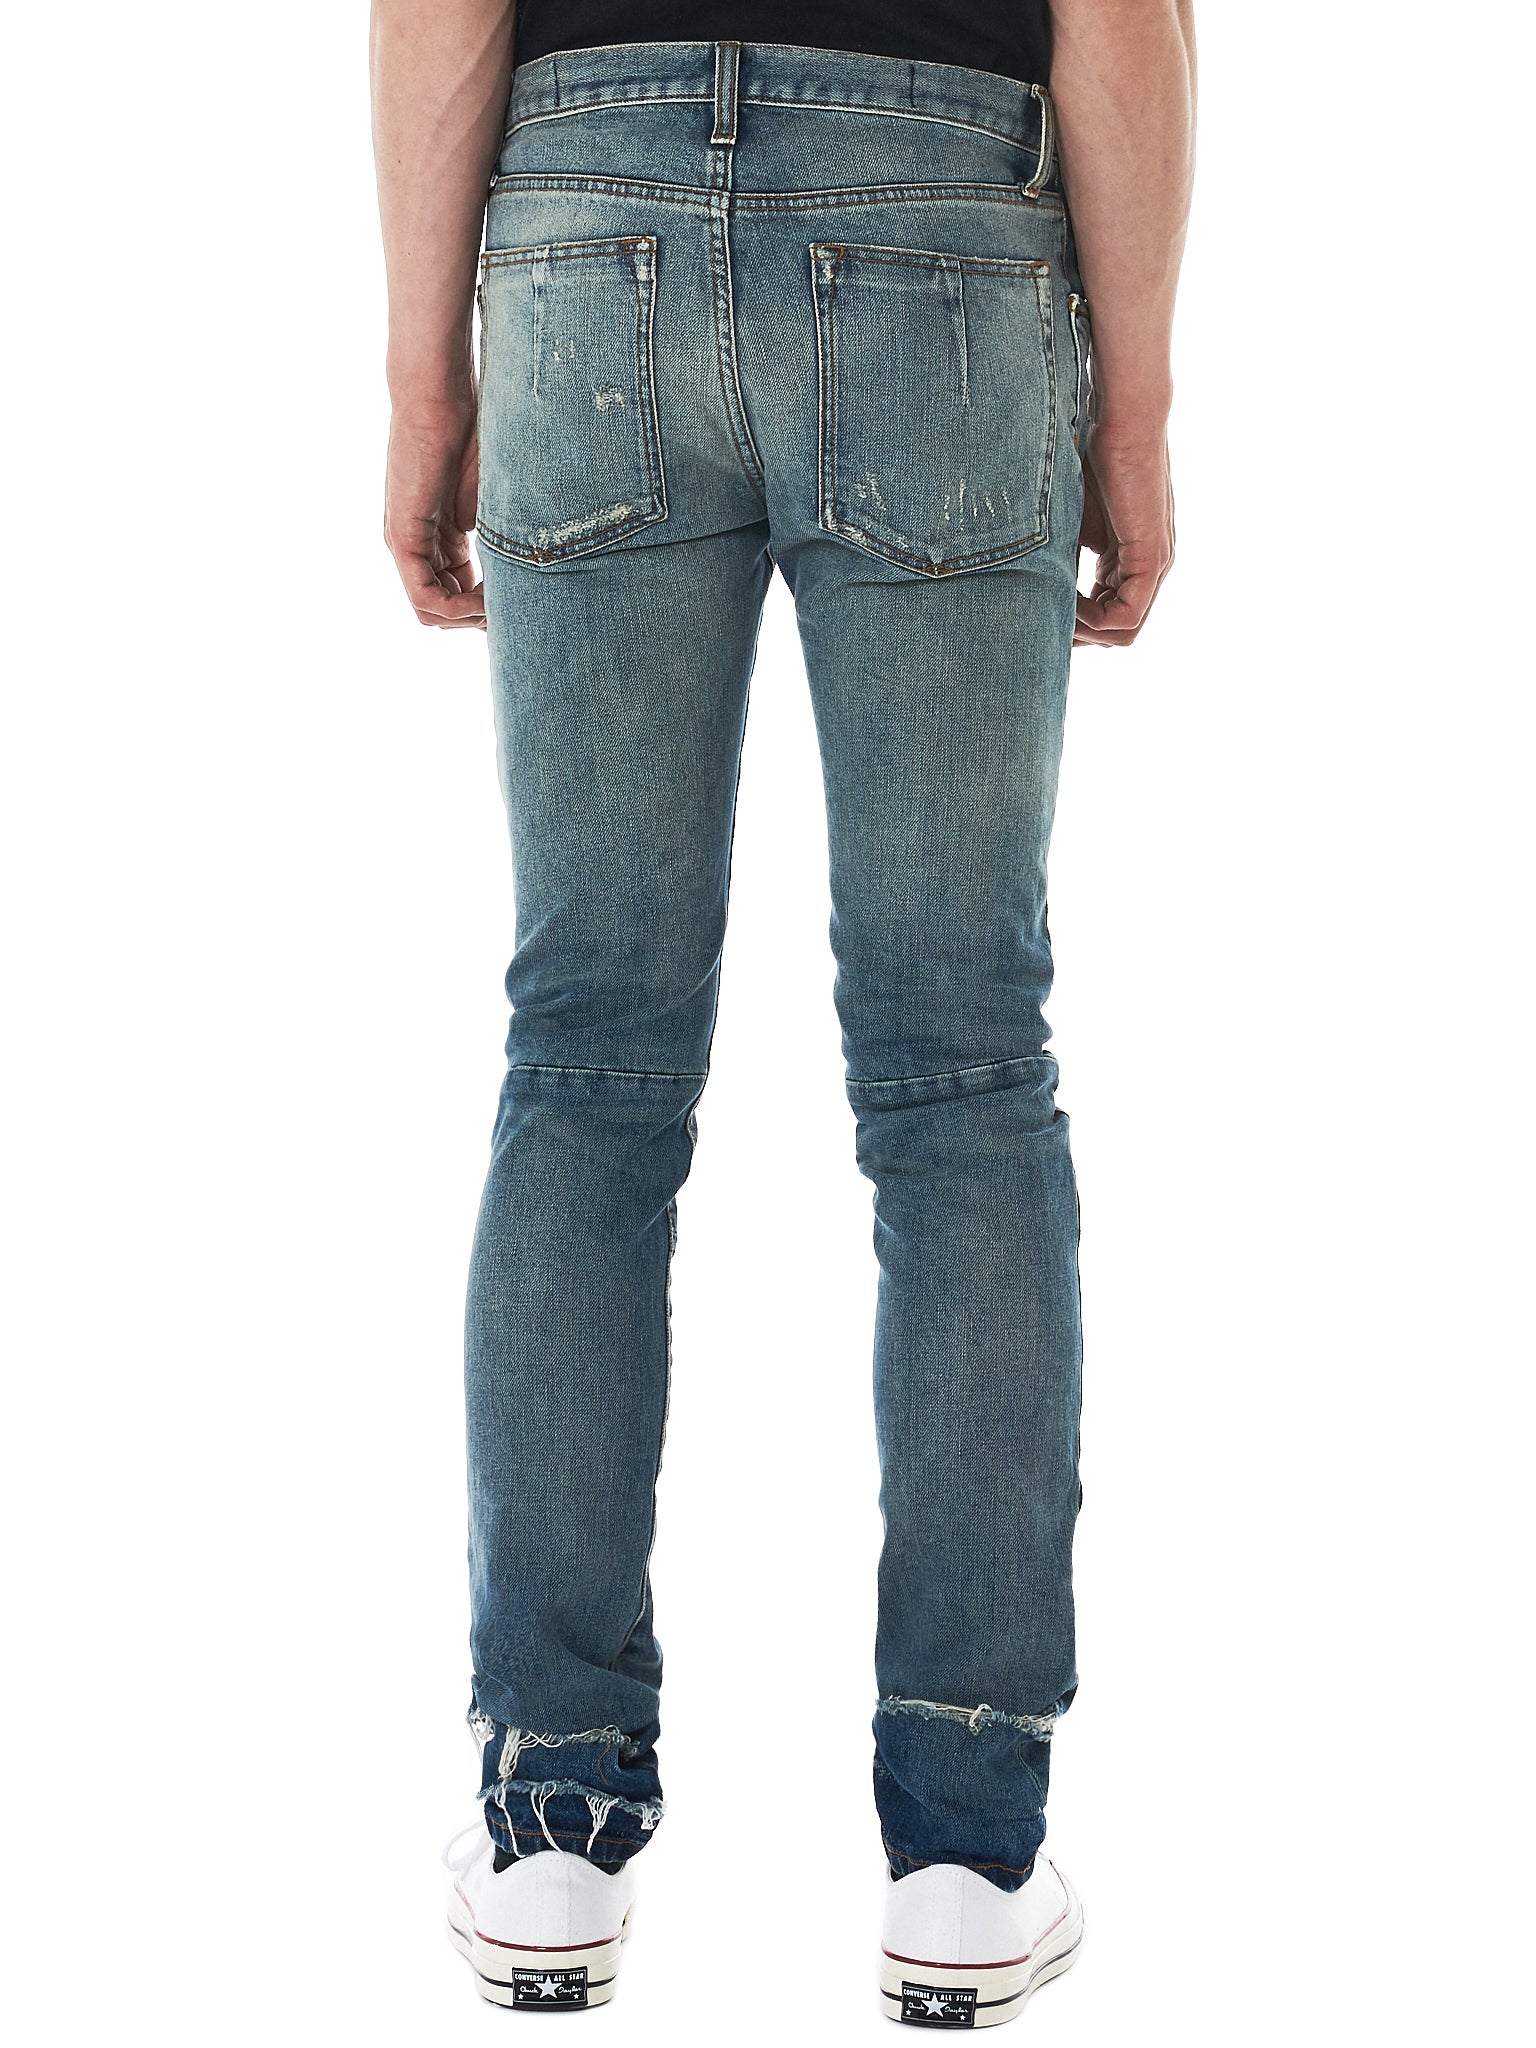 Unravel Distressed Jeans - Hlorenzo Back